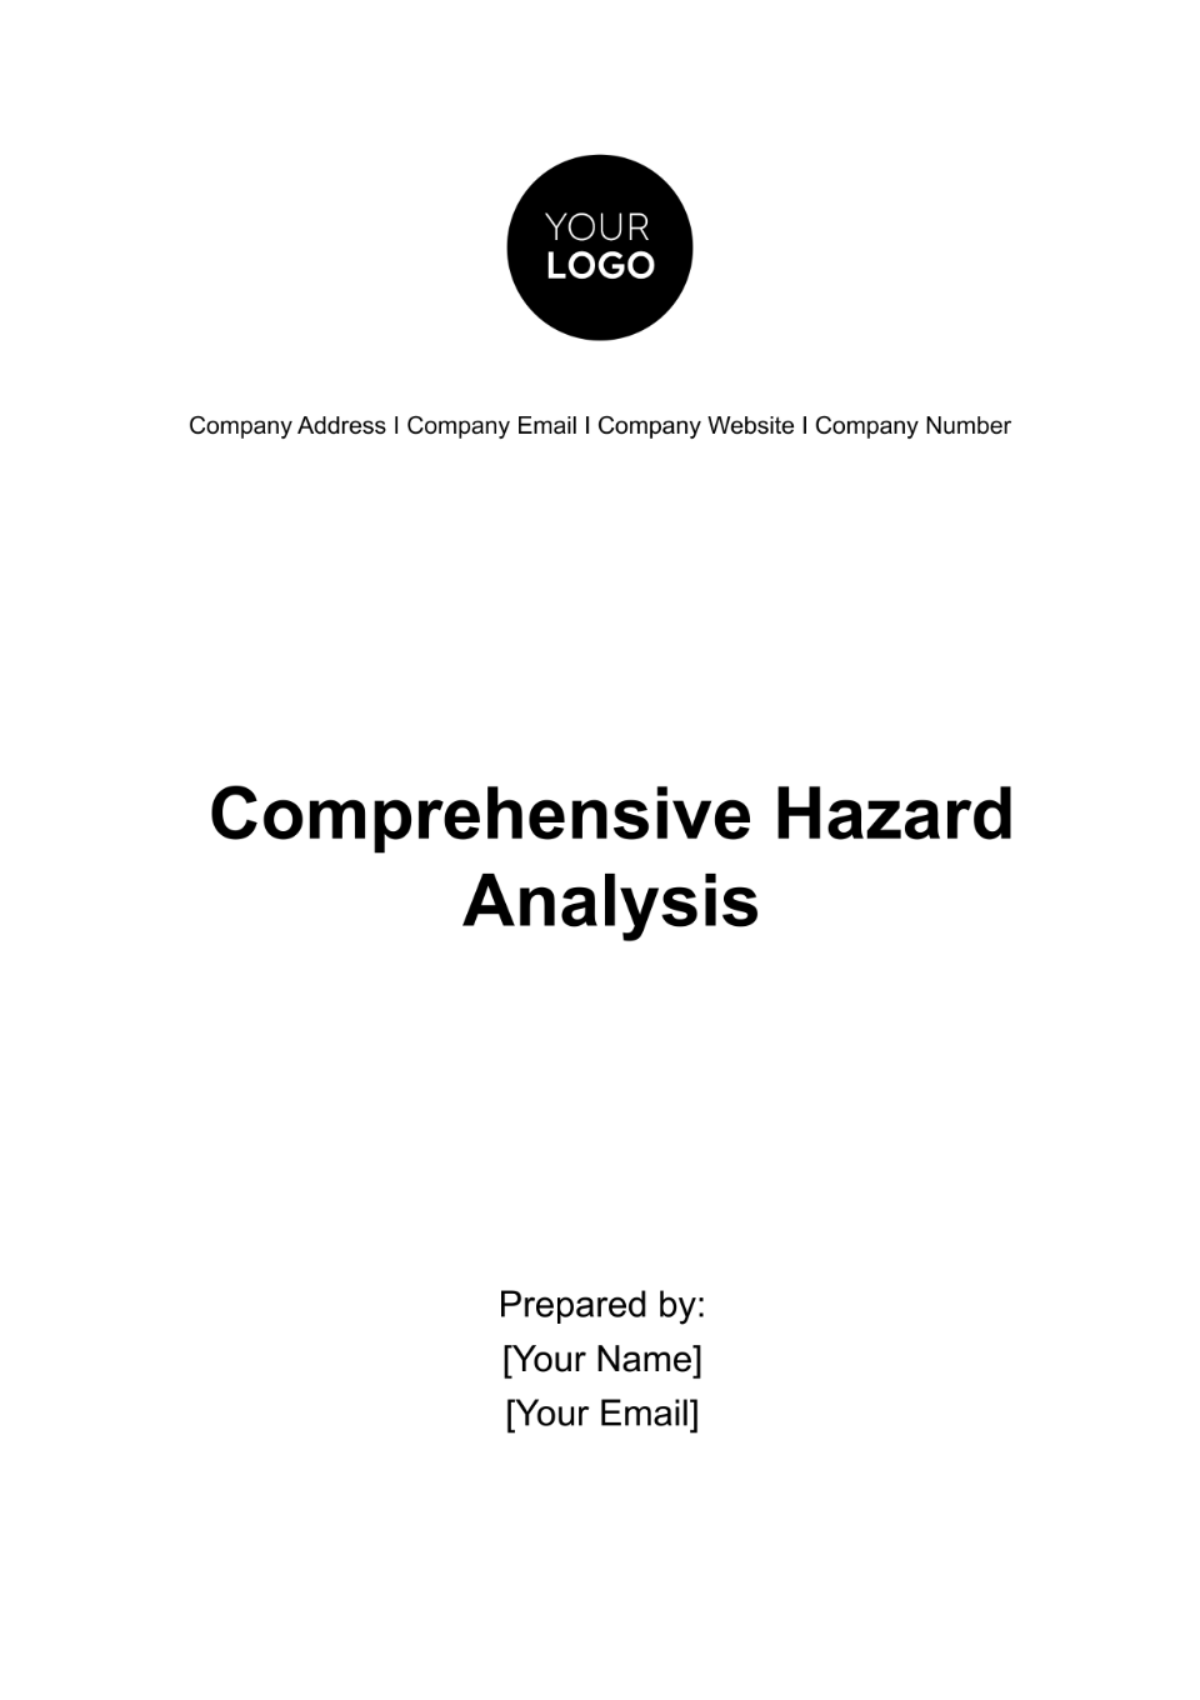 Comprehensive Hazard Analysis Template